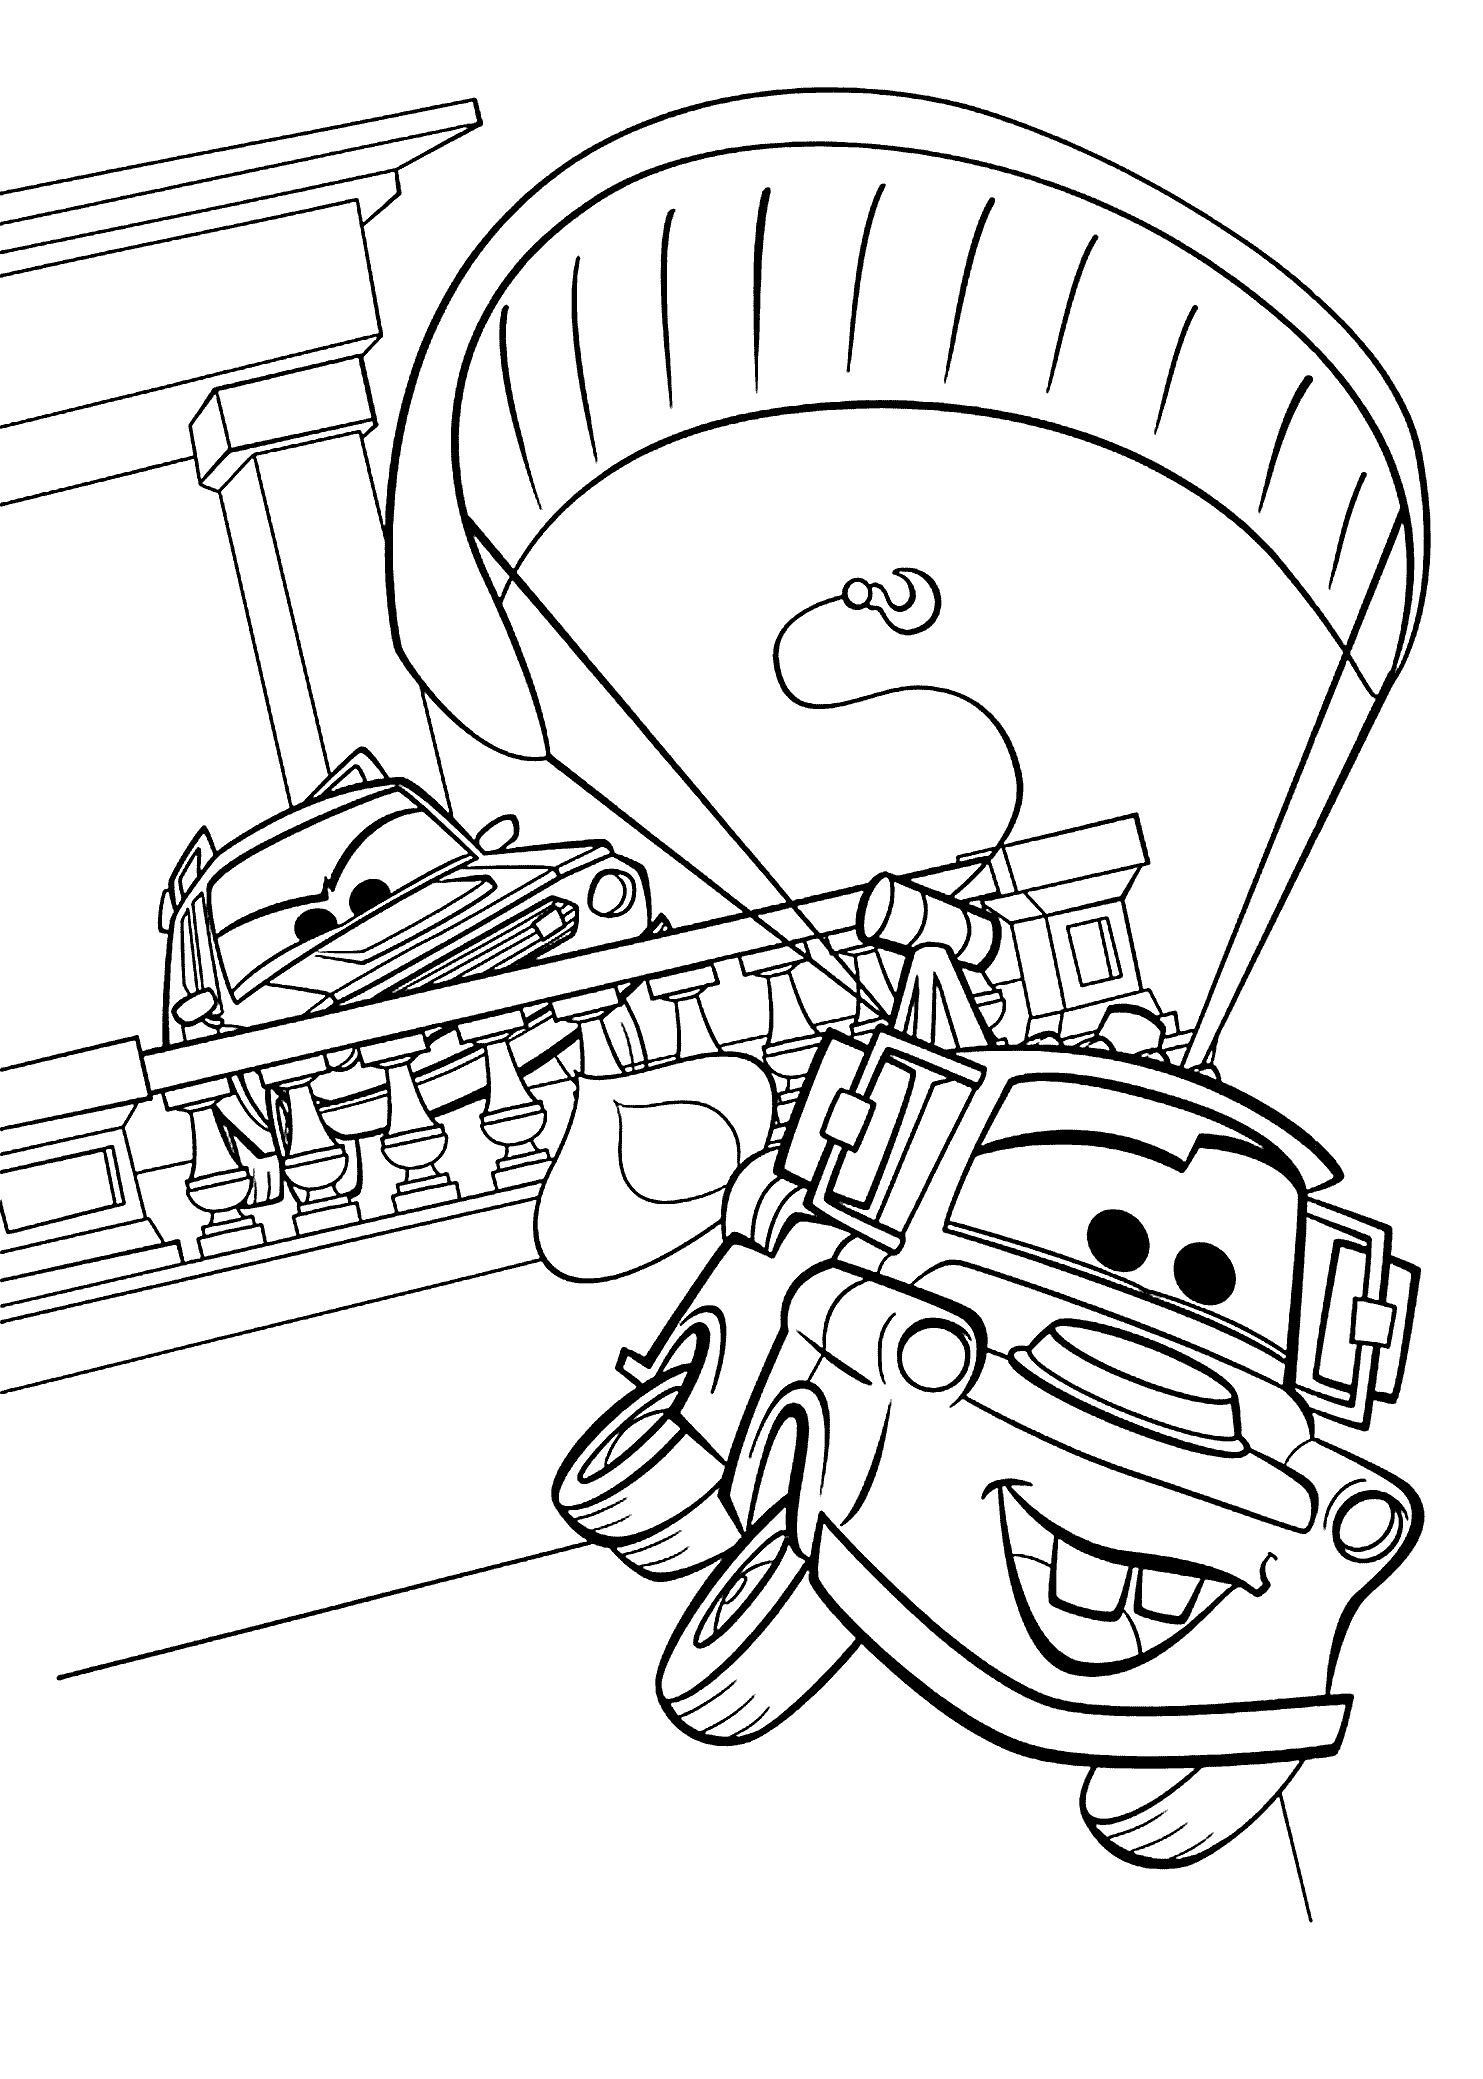 Pixar Cars Coloring Pages at GetColorings.com | Free printable